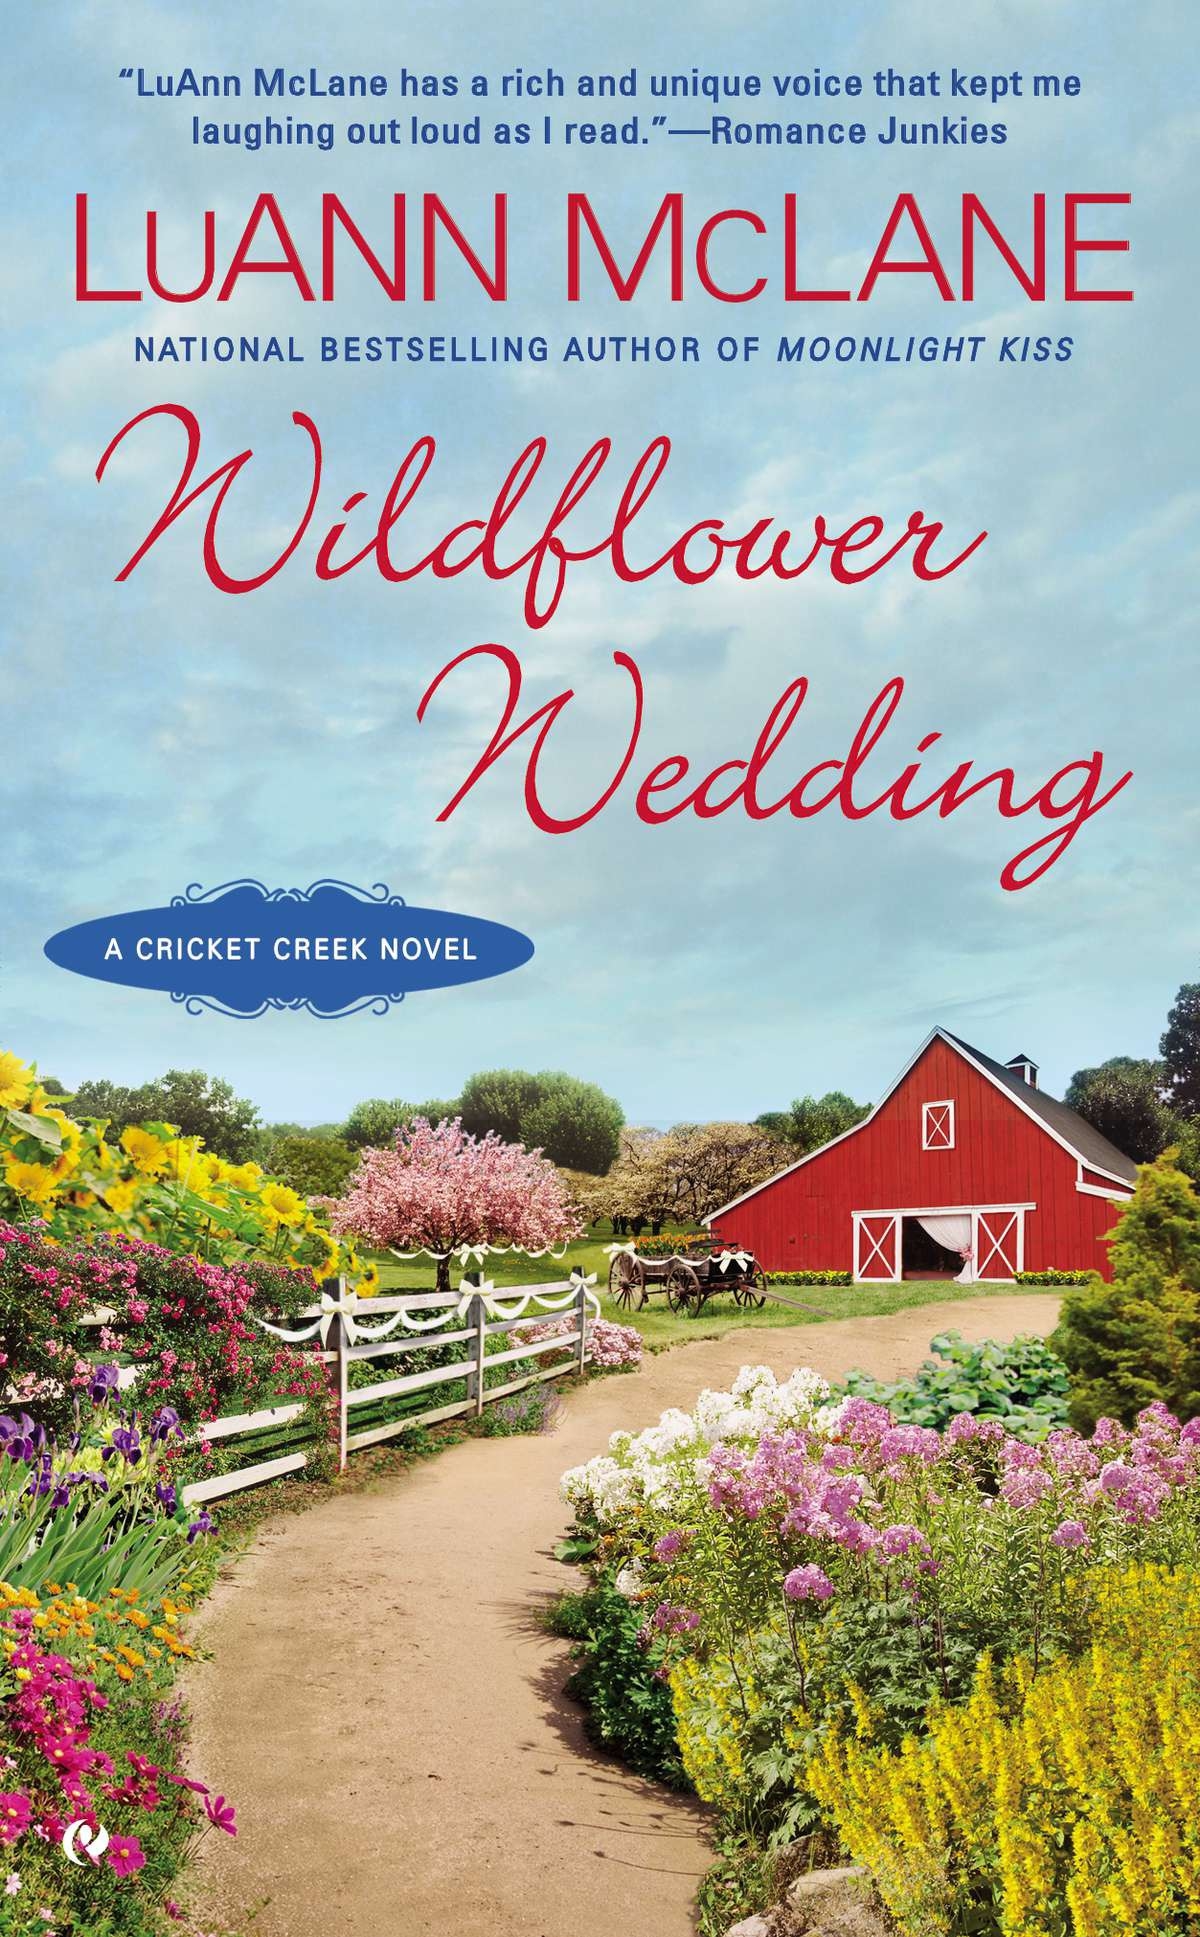 Wildflower Wedding by LuAnn McLane - Penguin Books Australia